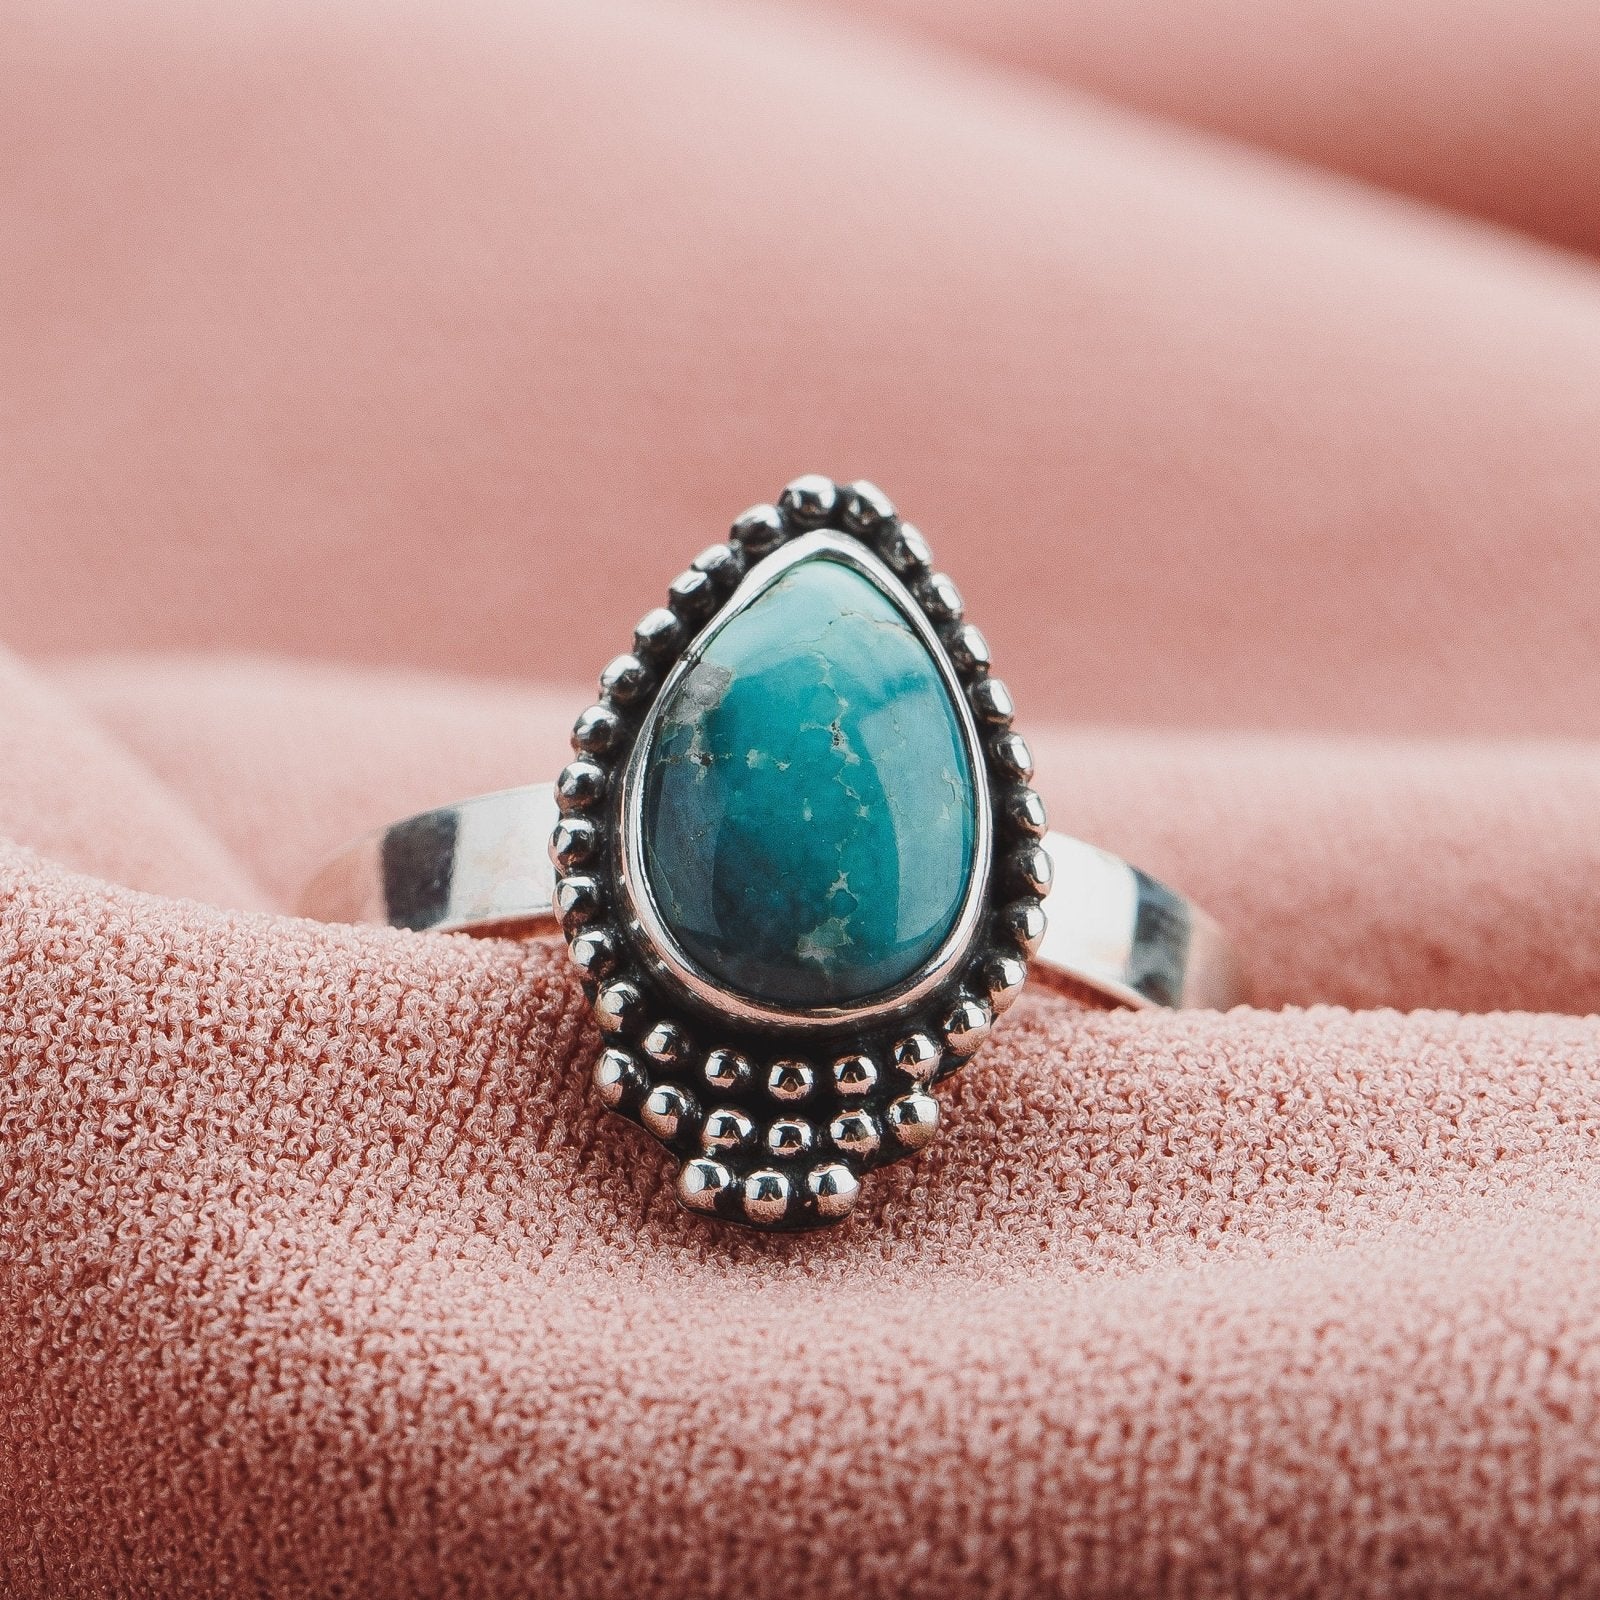 Size 7.5 White Water Turquoise Gemstone Ring - Melanie Golden Jewelry - gemstone rings, rings